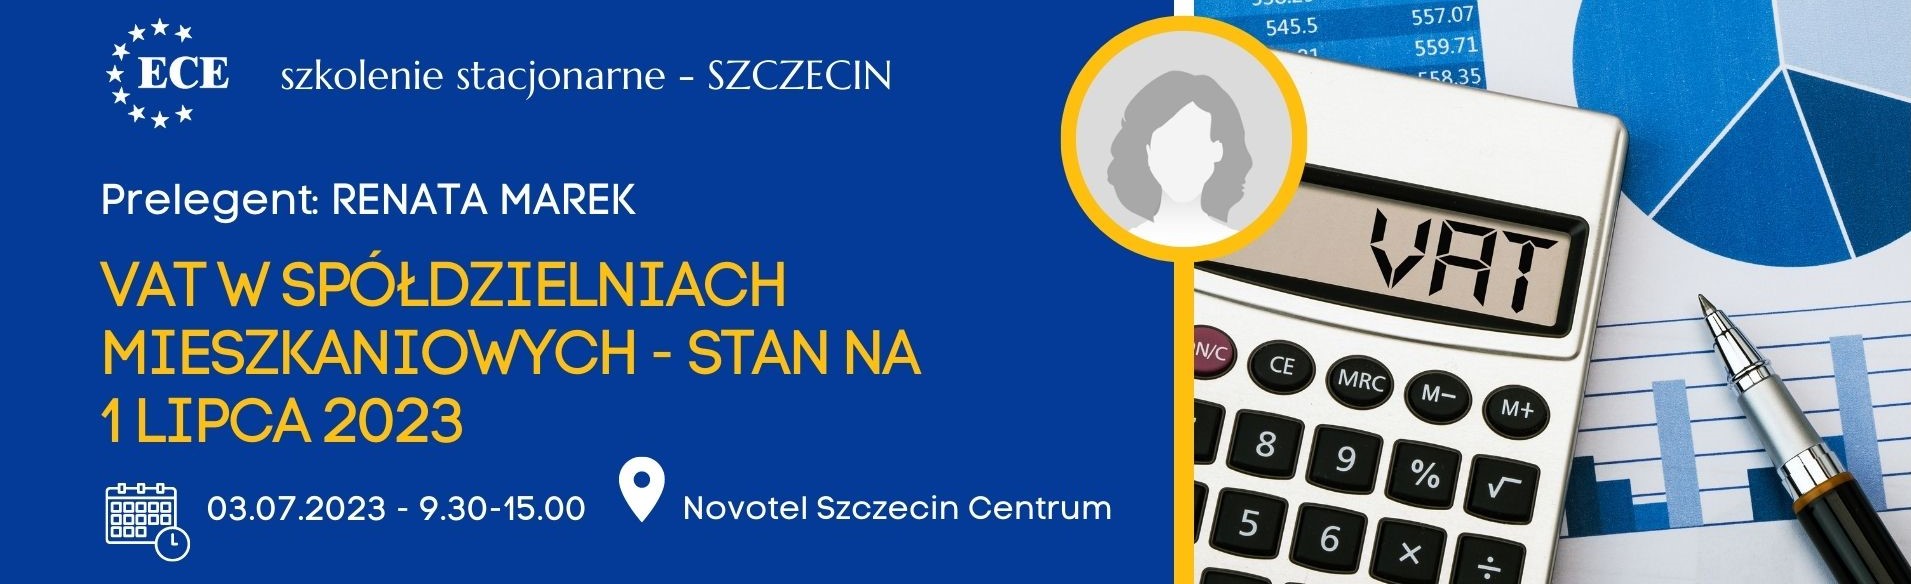 Szczecin Baner